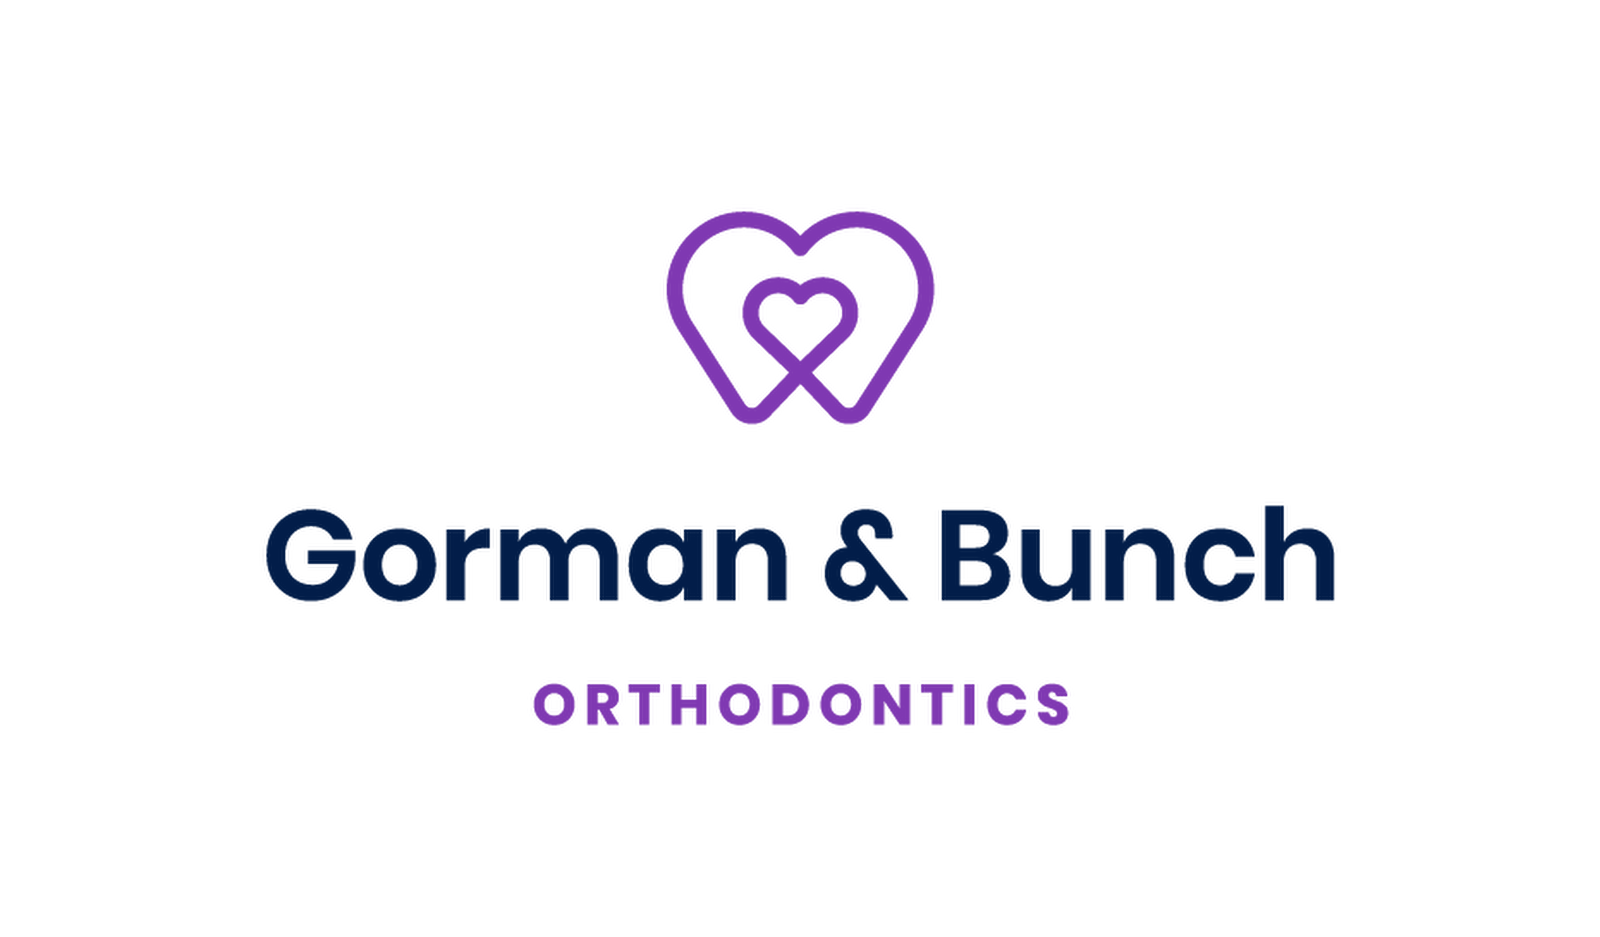 Gorman & Bunch Orthodontics